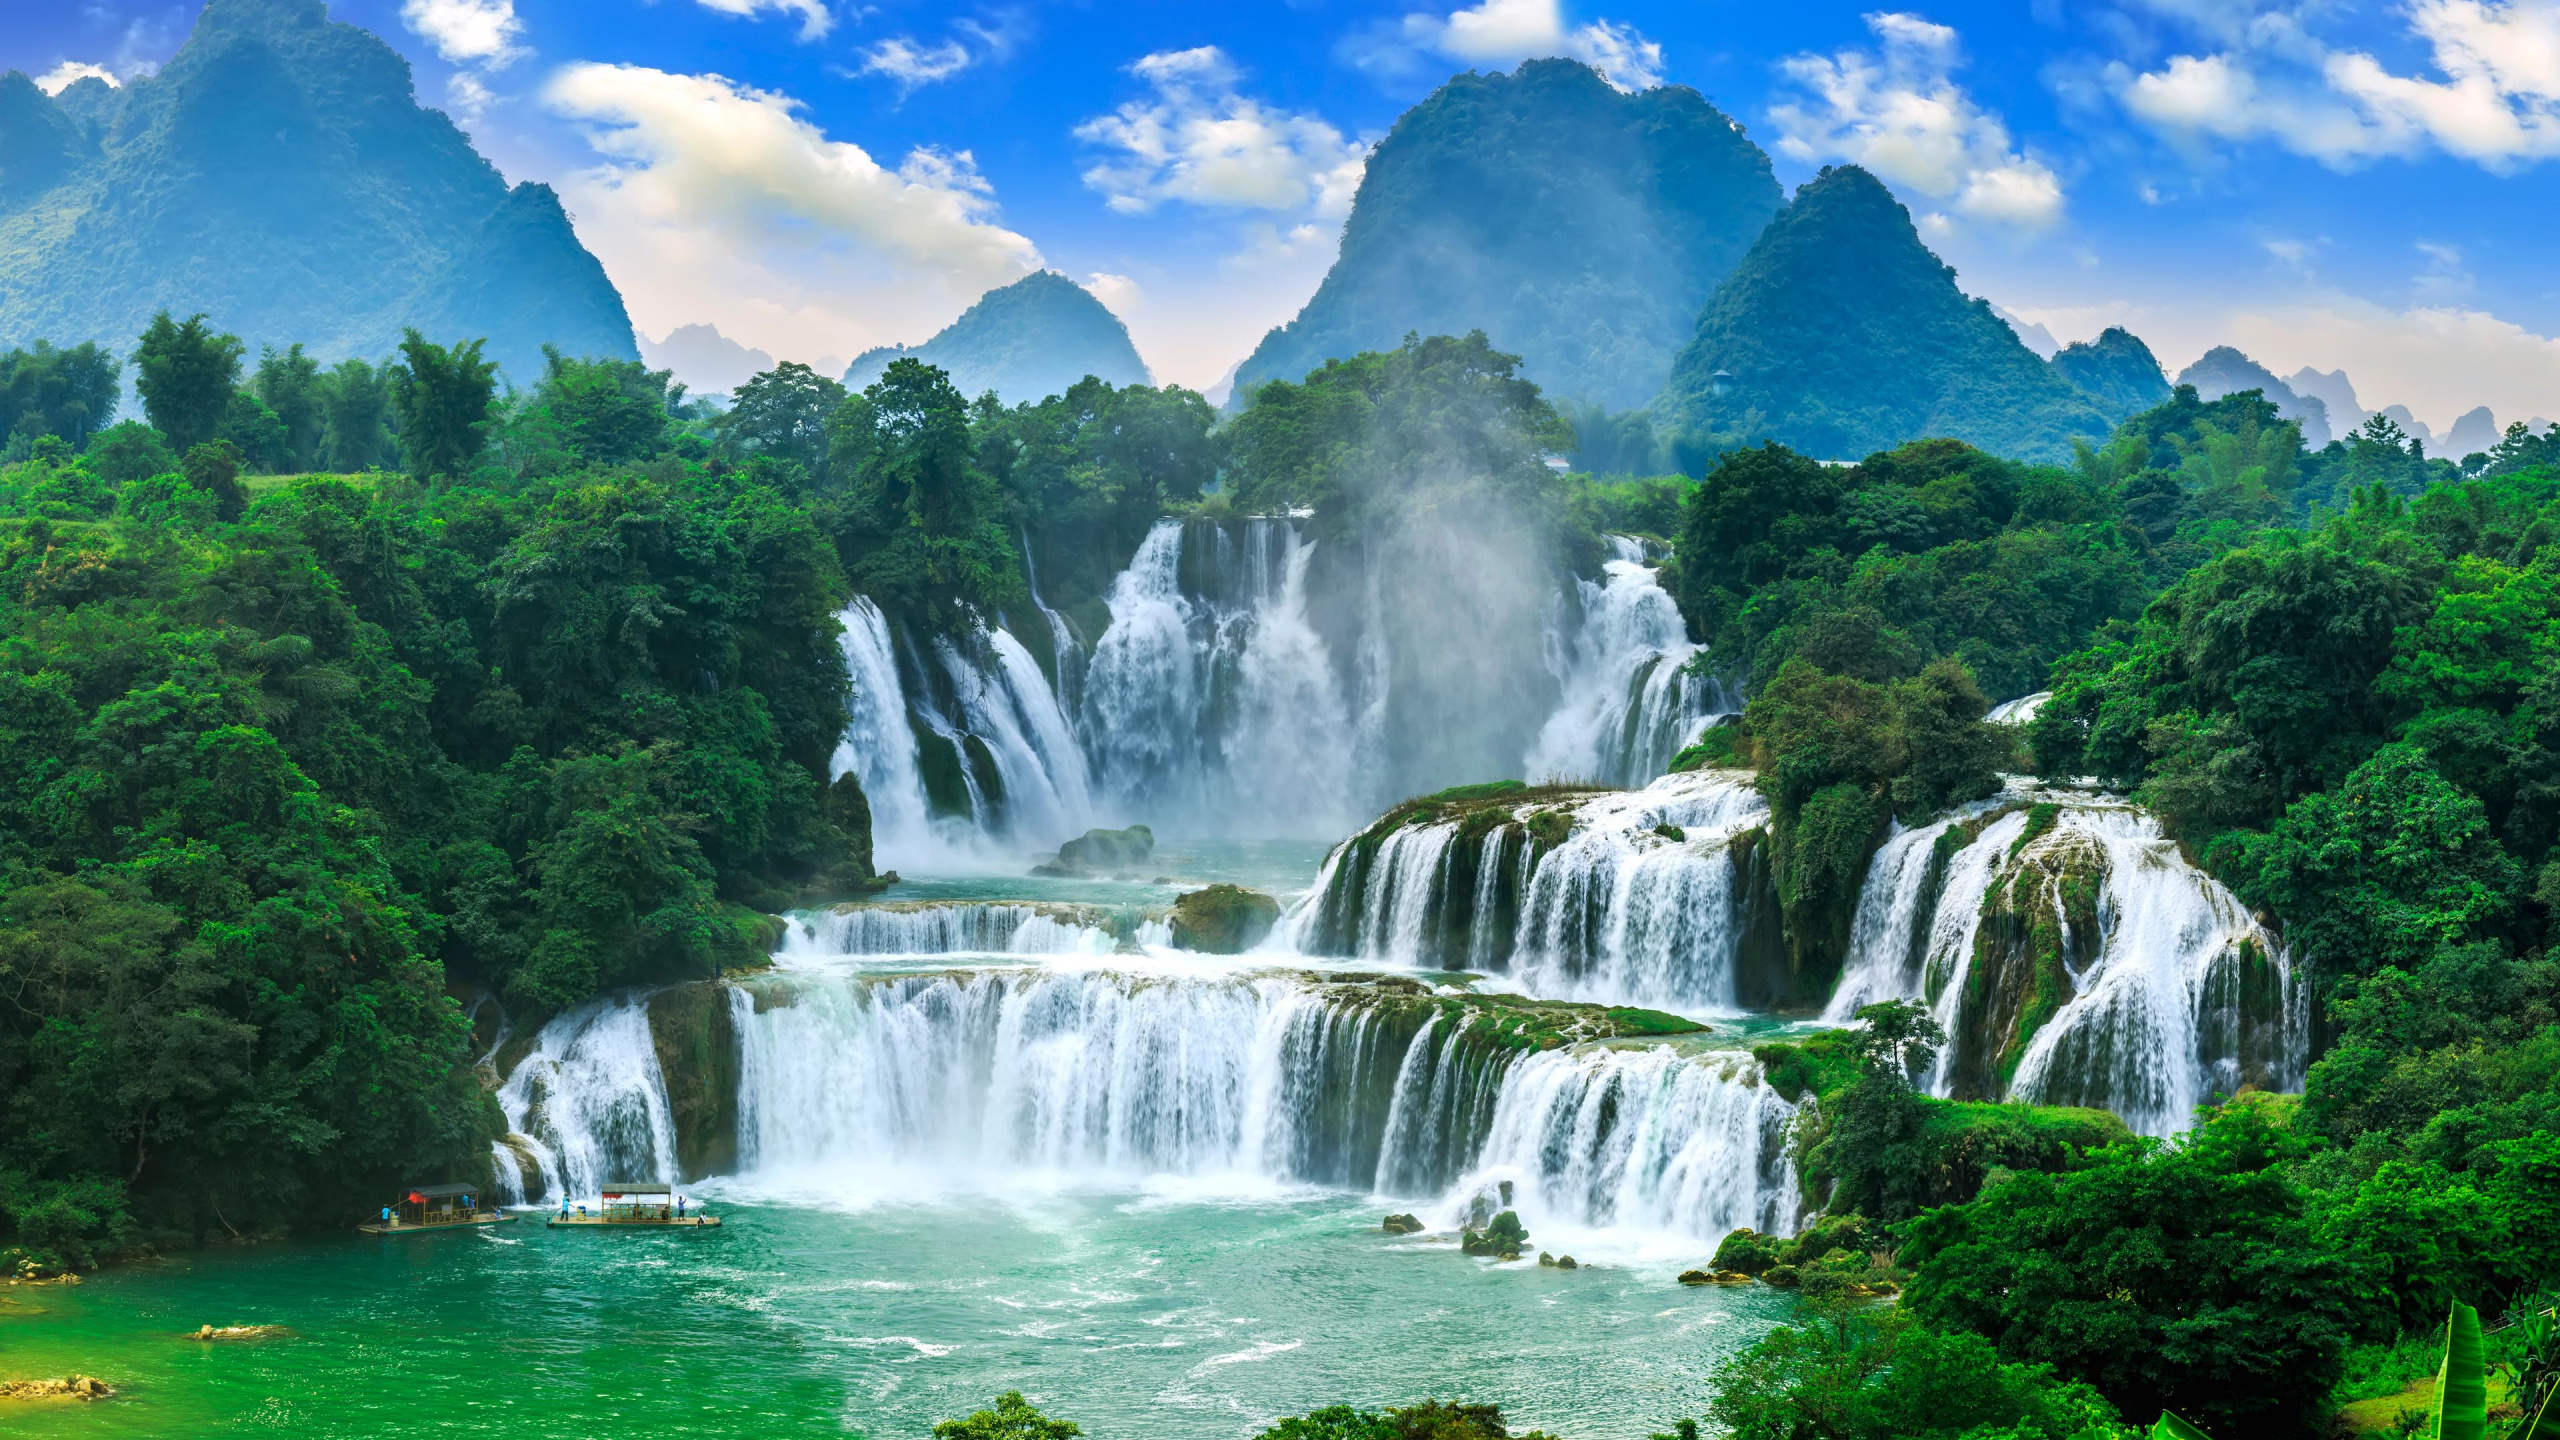 安赫尔瀑布, 菩提瀑布Latehar, Kuang si Waterfall, Chongzuo, 旅行 壁纸 2560x1440 允许